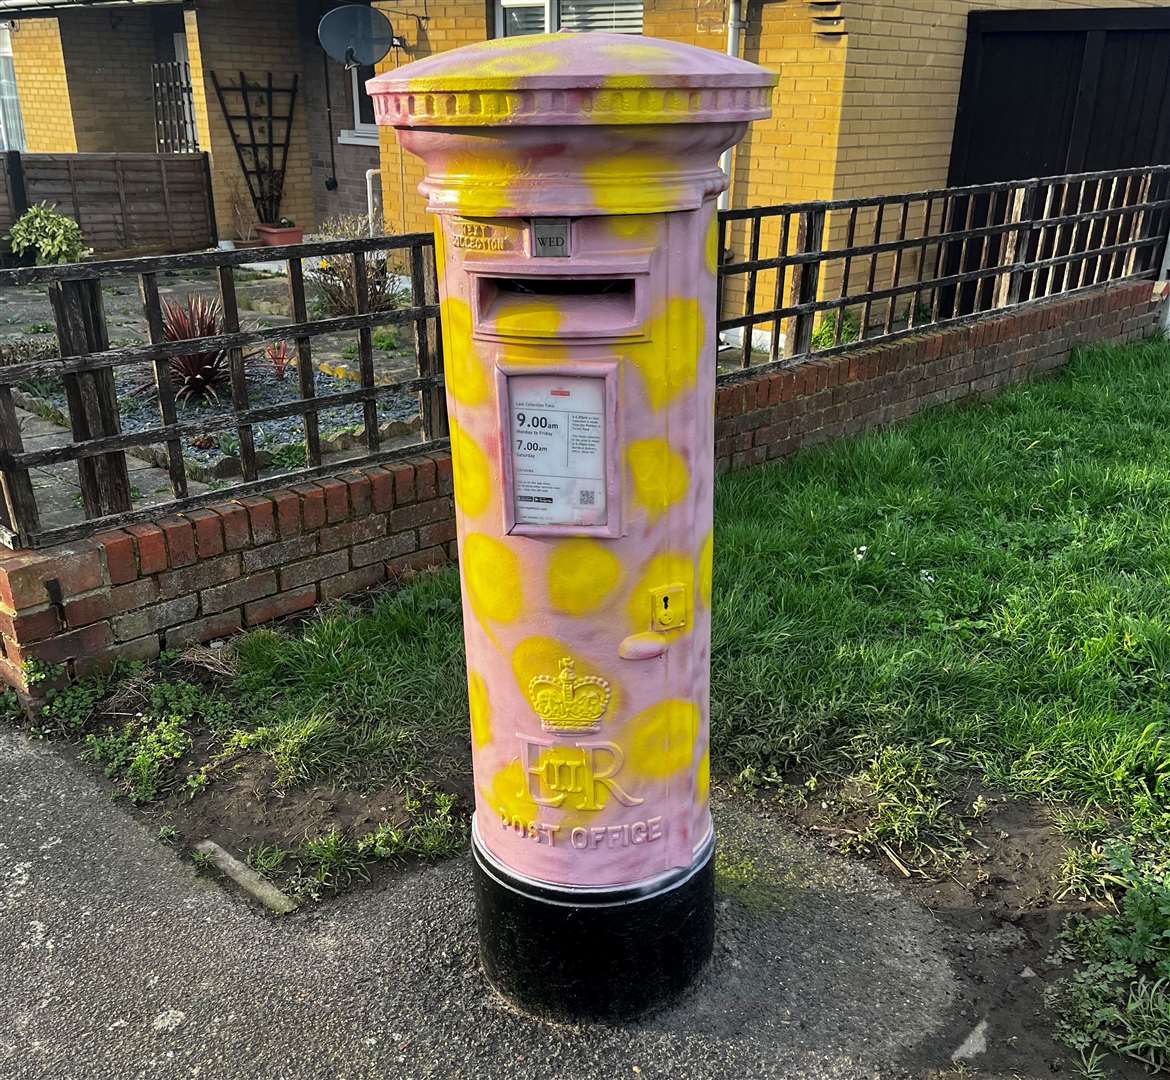 A 'Mr Blobby' post box in Joyce Green Lane, Dartford